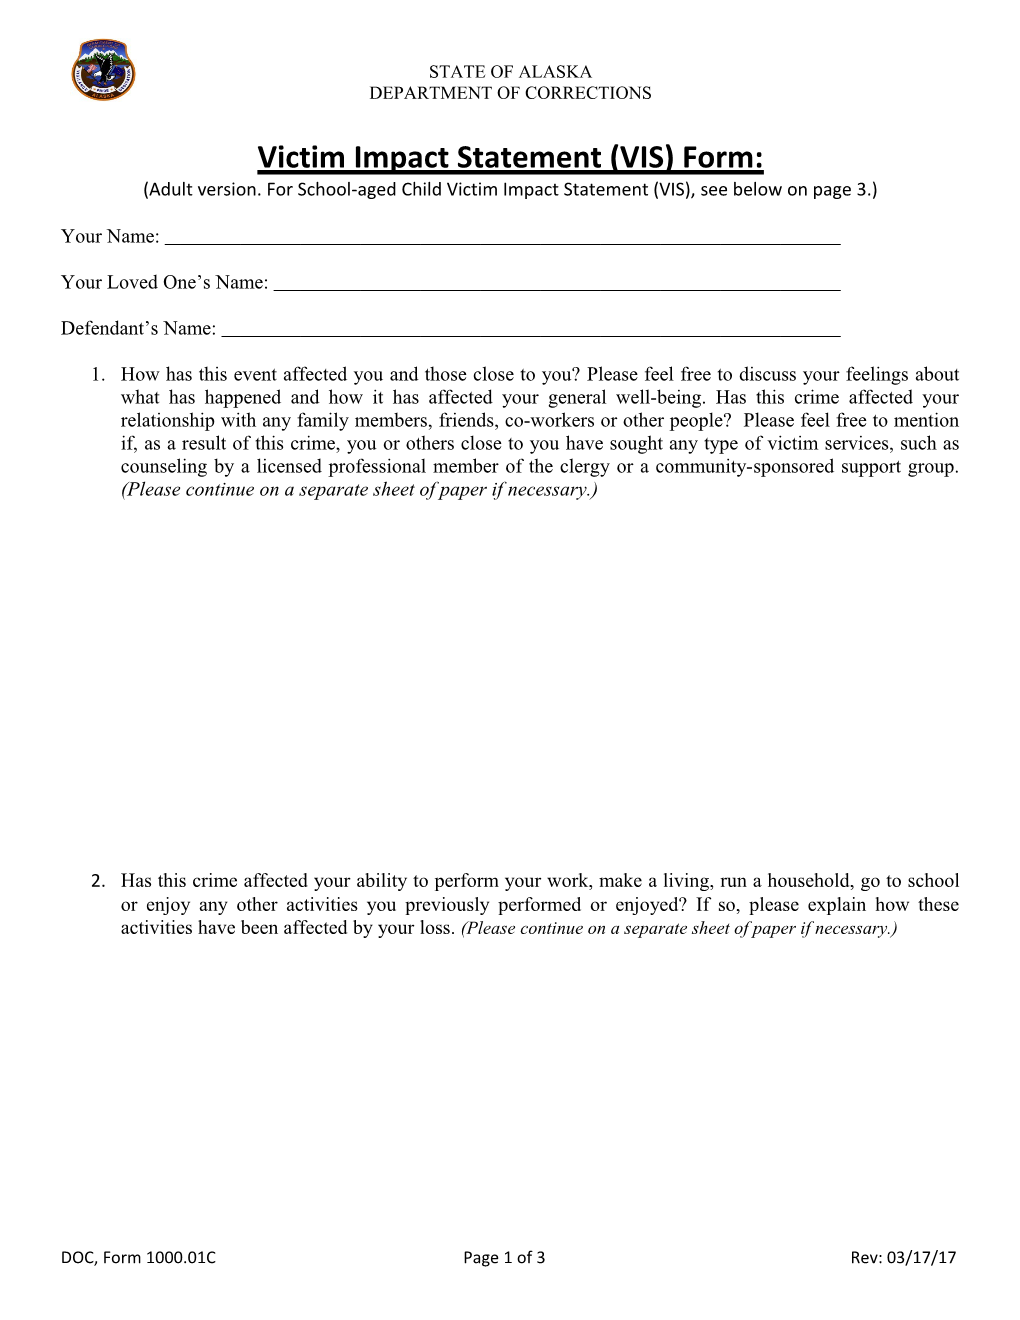 Victim Impact Statement (VIS) Form